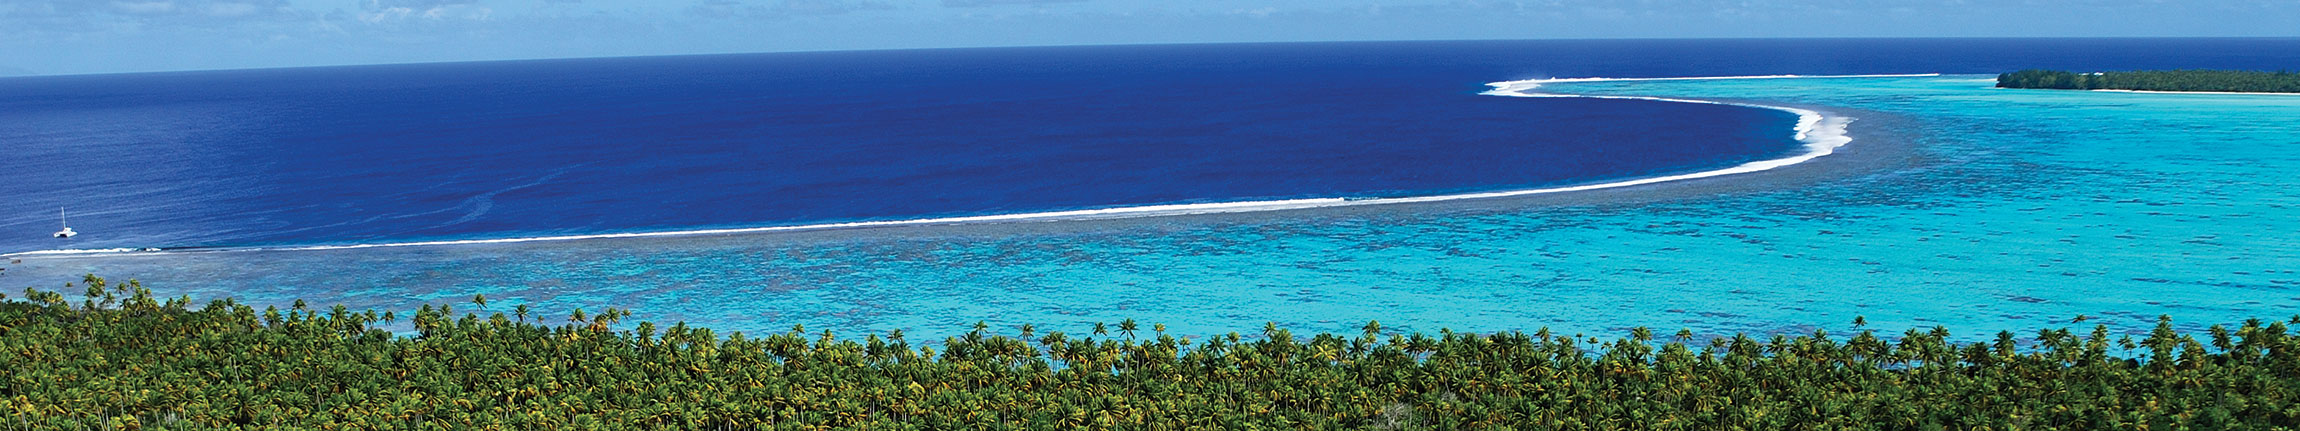 offre-manava-pearl-beach-resort-e-tahiti-travel-bandeau